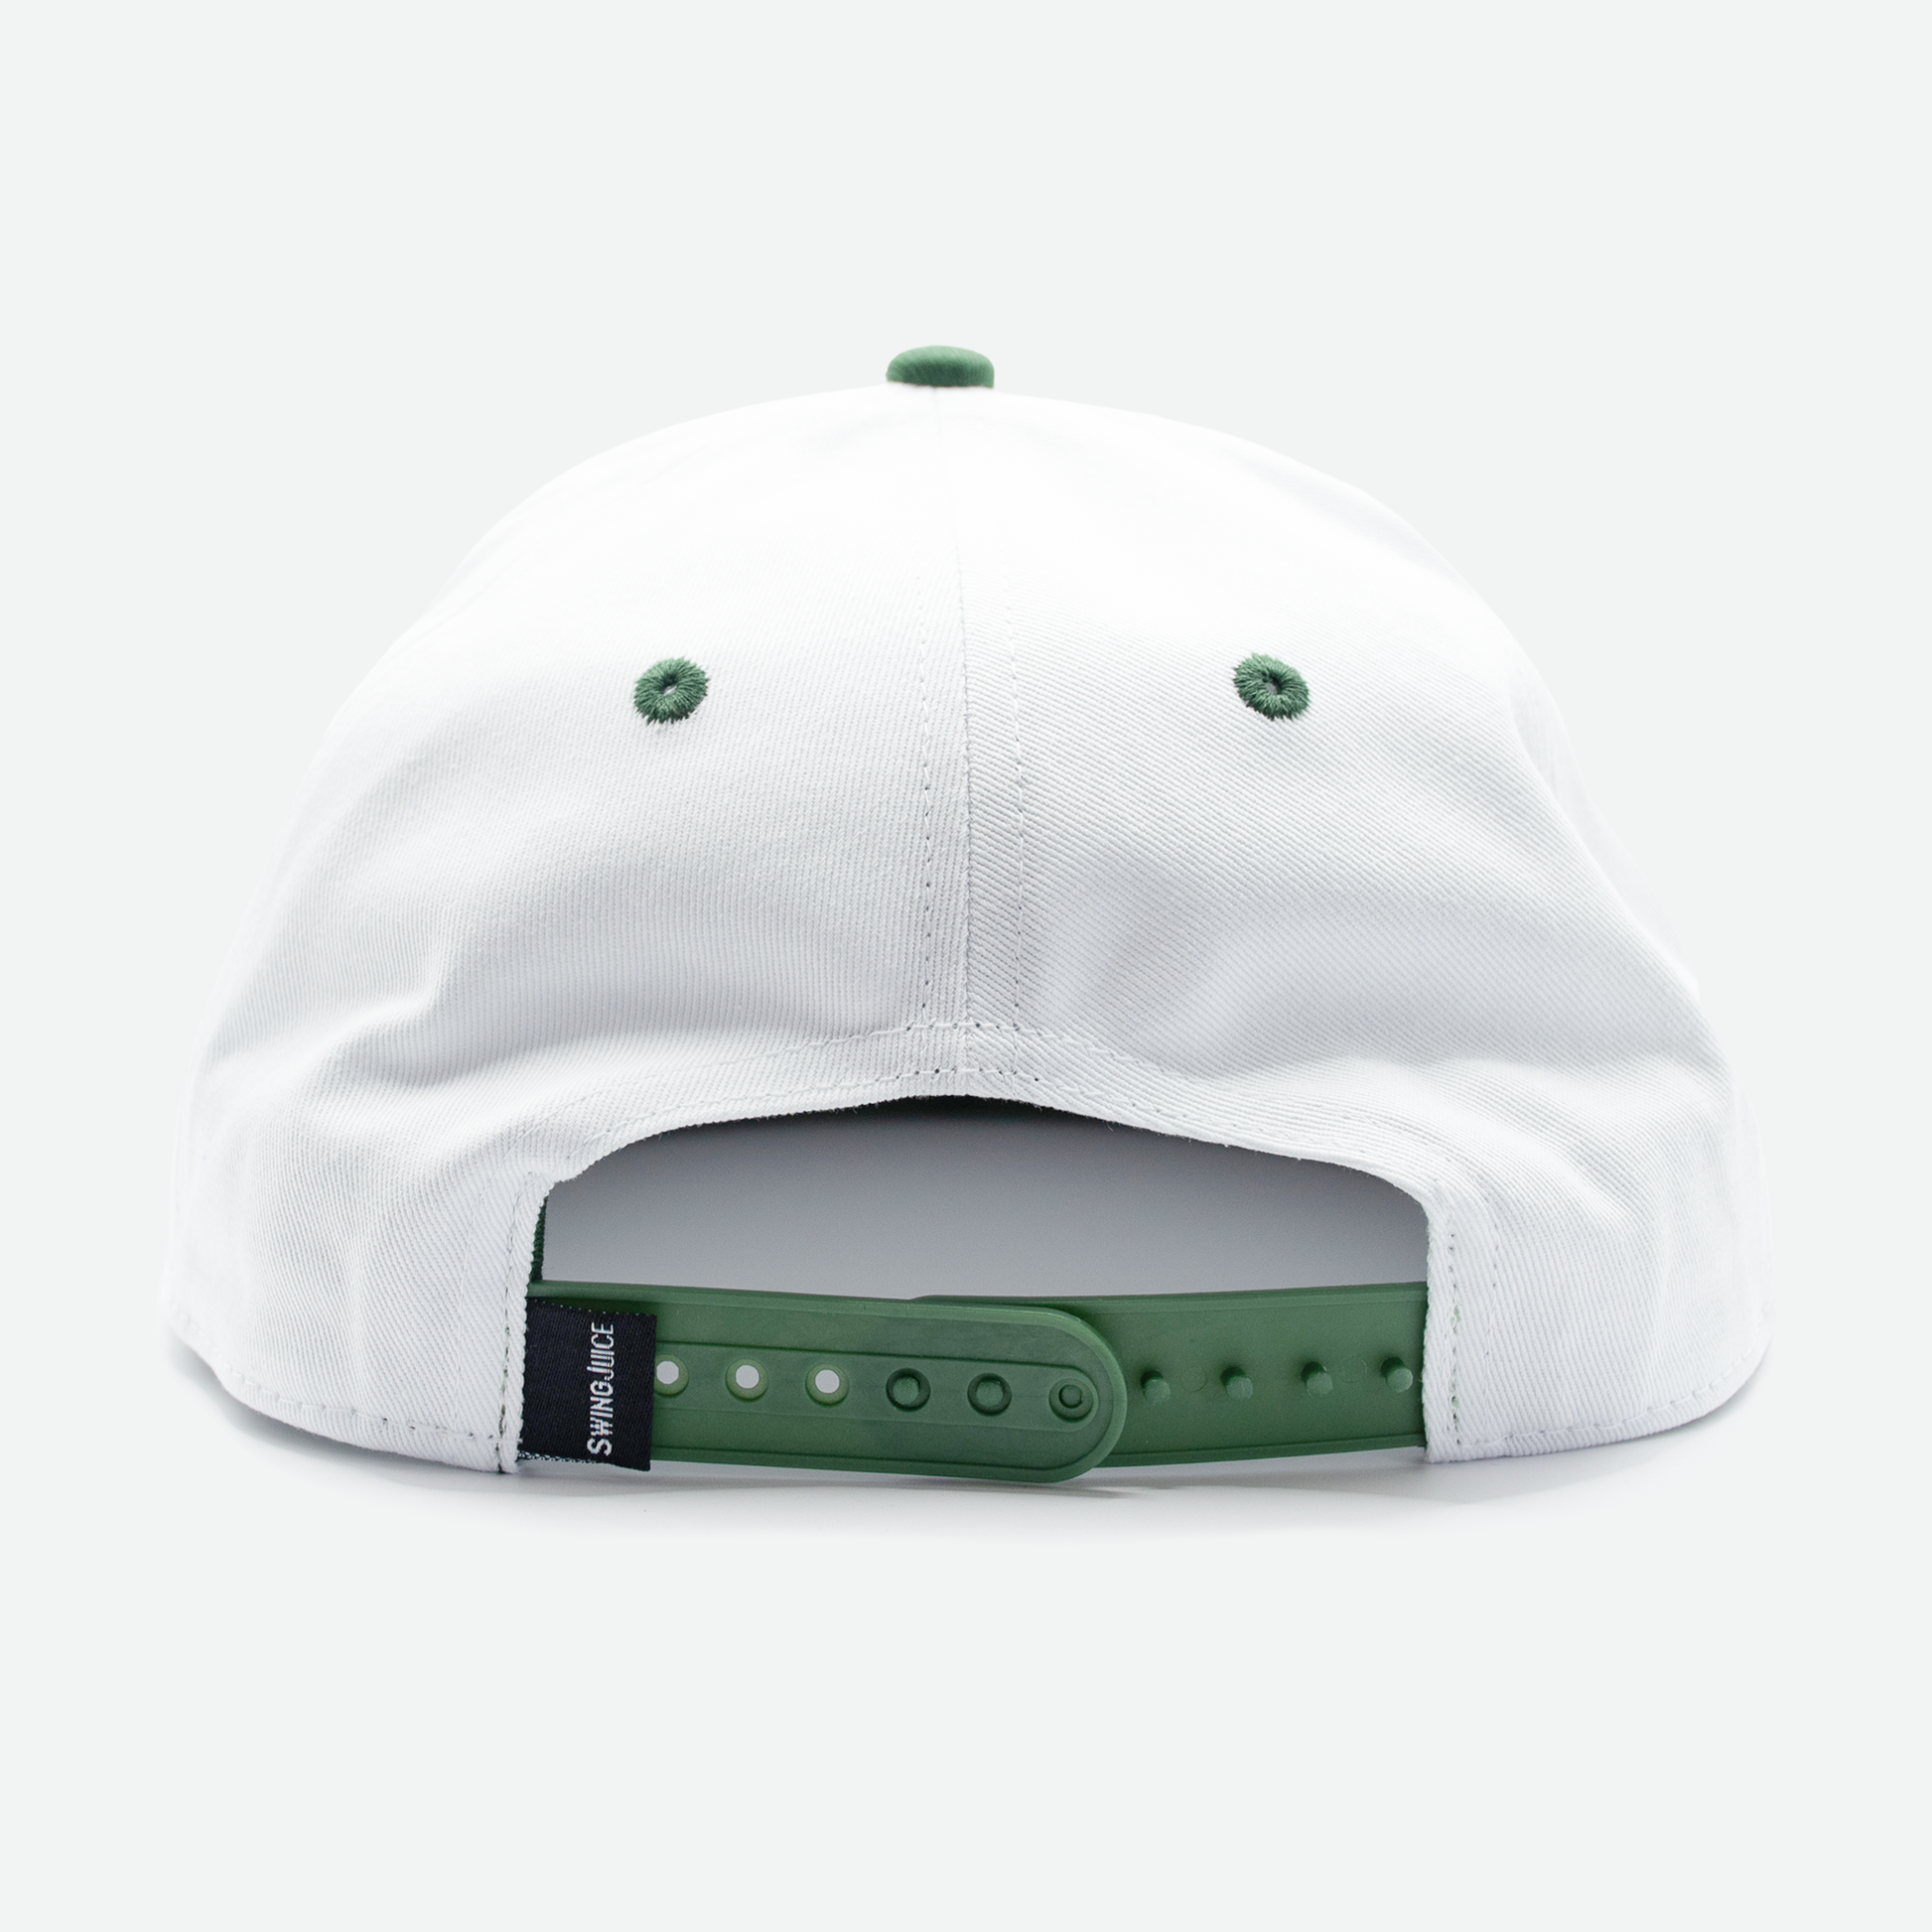 Golf Happy Chubbs Barker Shooter Unisex Snapback Hat-White